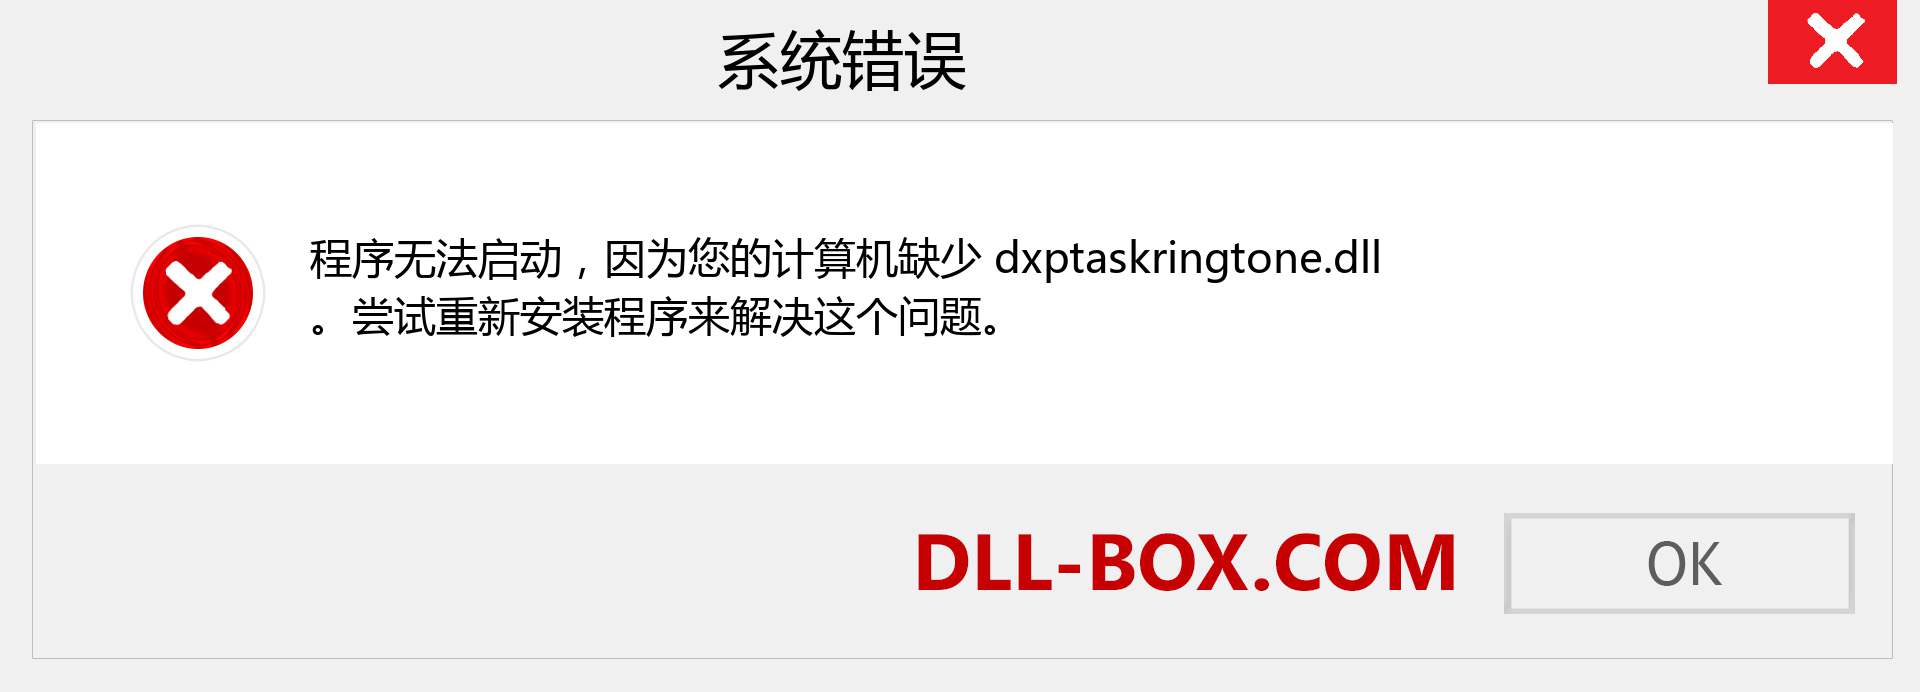 dxptaskringtone.dll 文件丢失？。 适用于 Windows 7、8、10 的下载 - 修复 Windows、照片、图像上的 dxptaskringtone dll 丢失错误